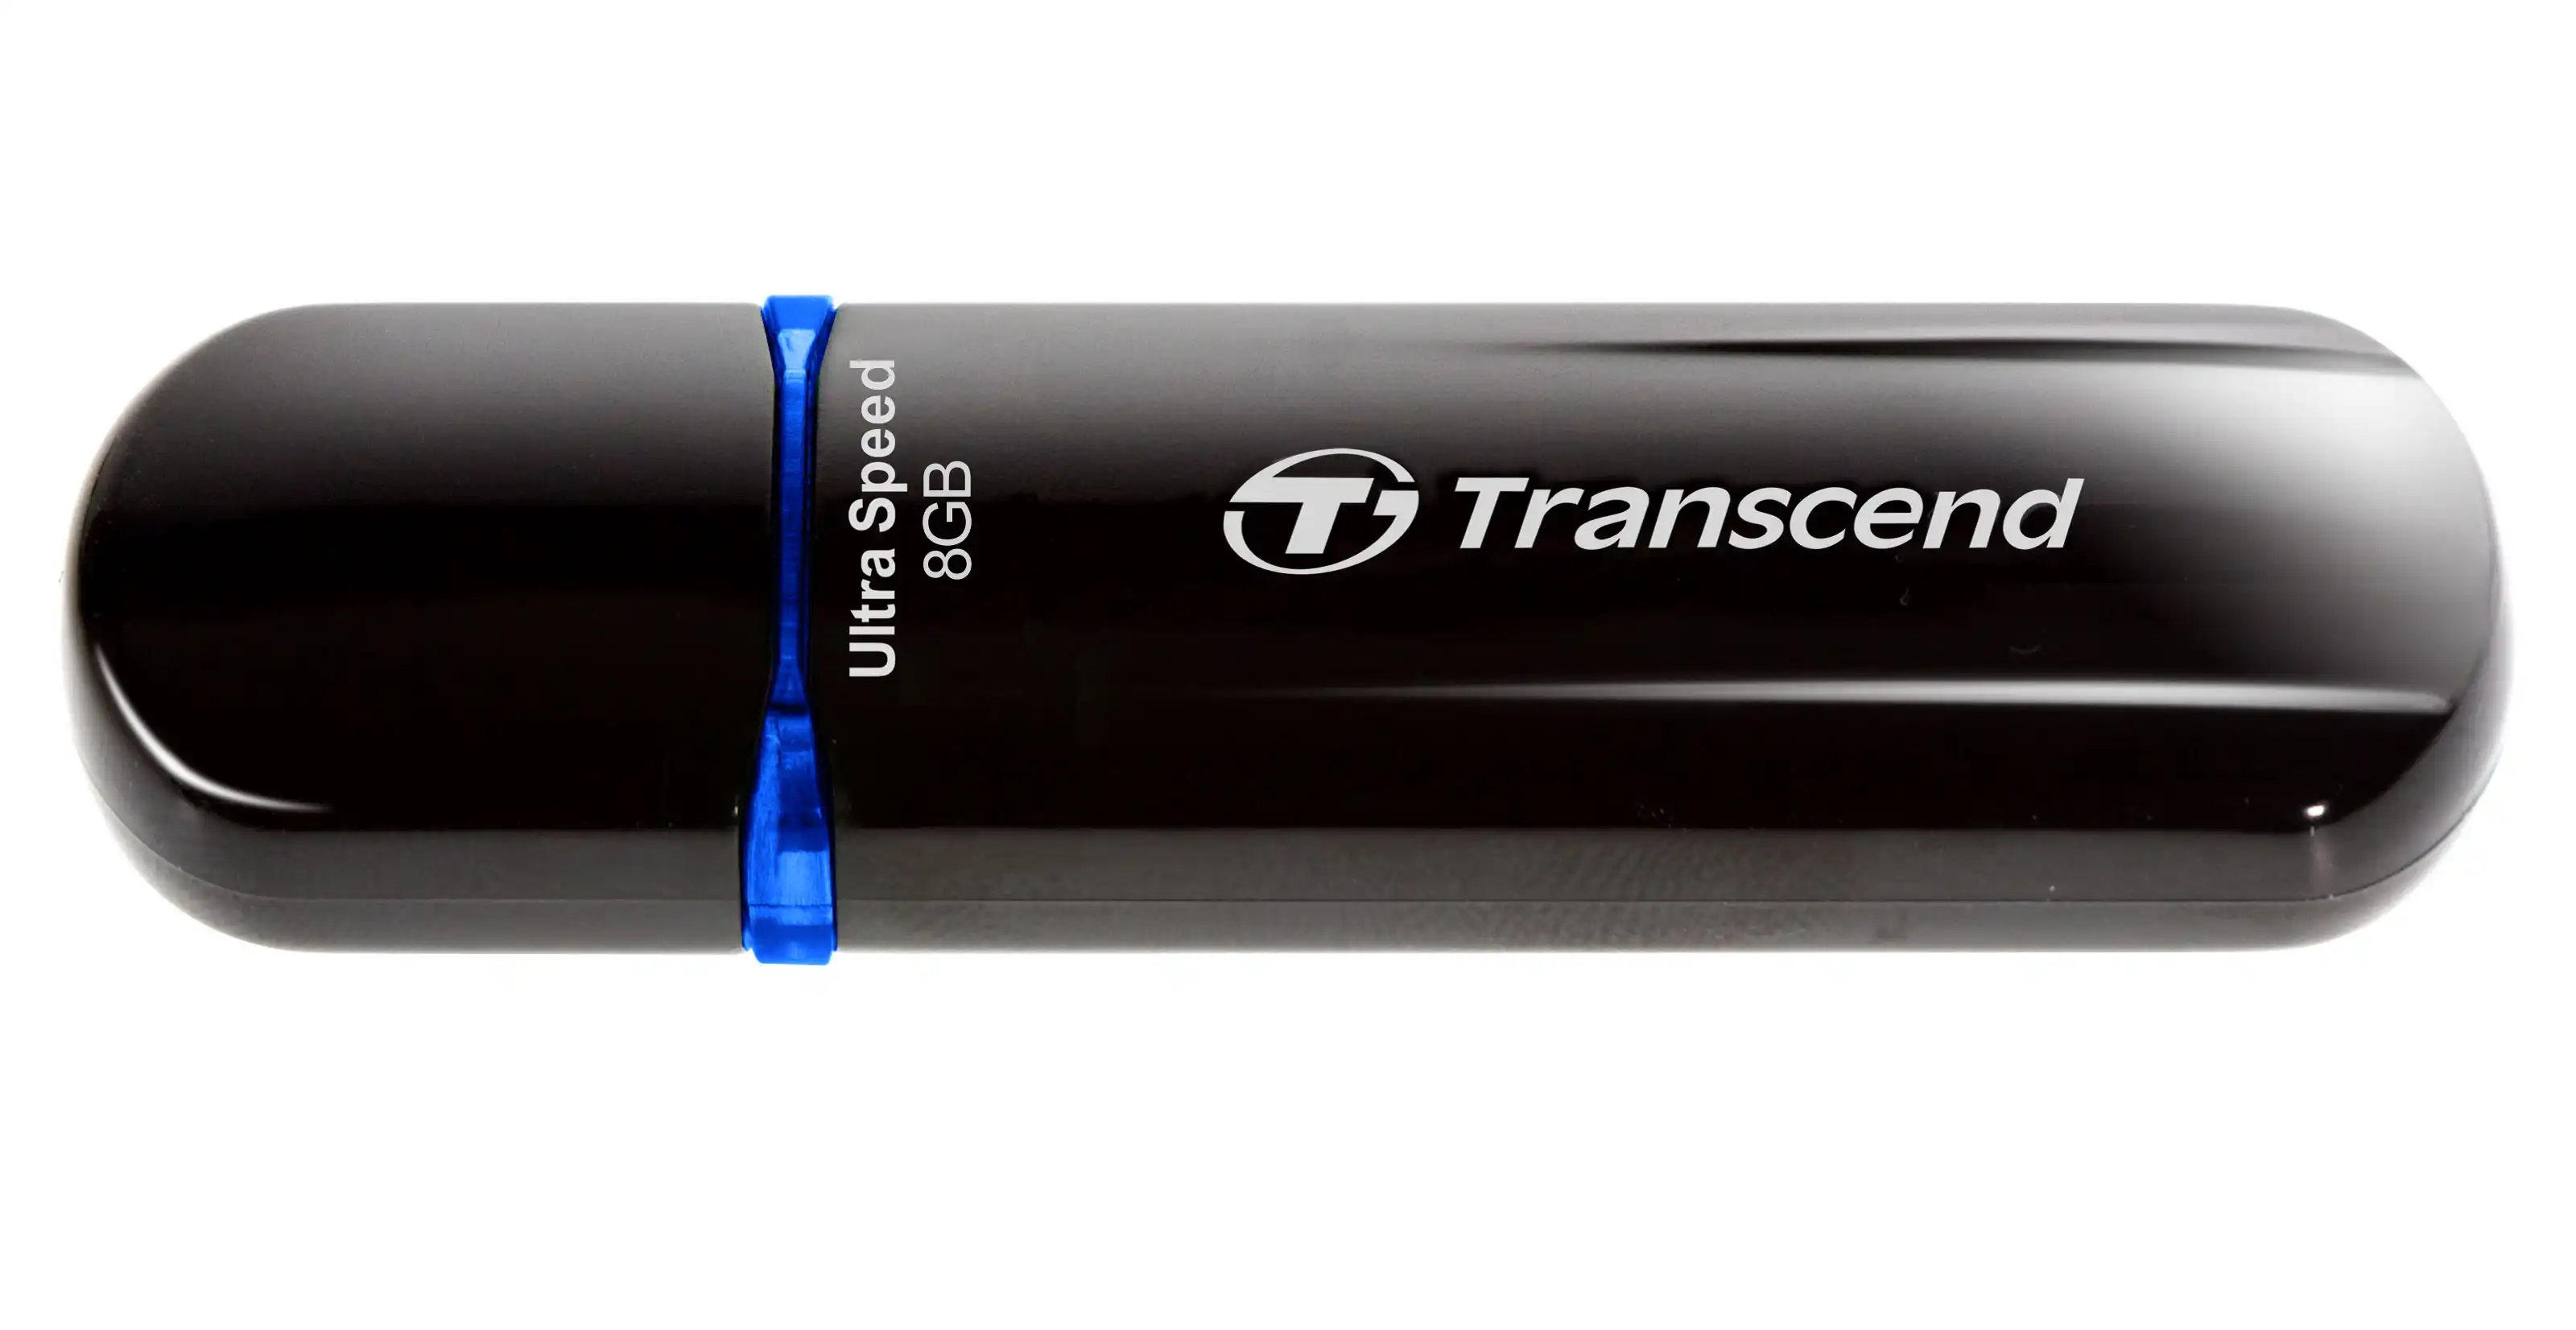 Флеш-накопитель TRANSCEND JetFlash 600 8GB (TS8GJF600)